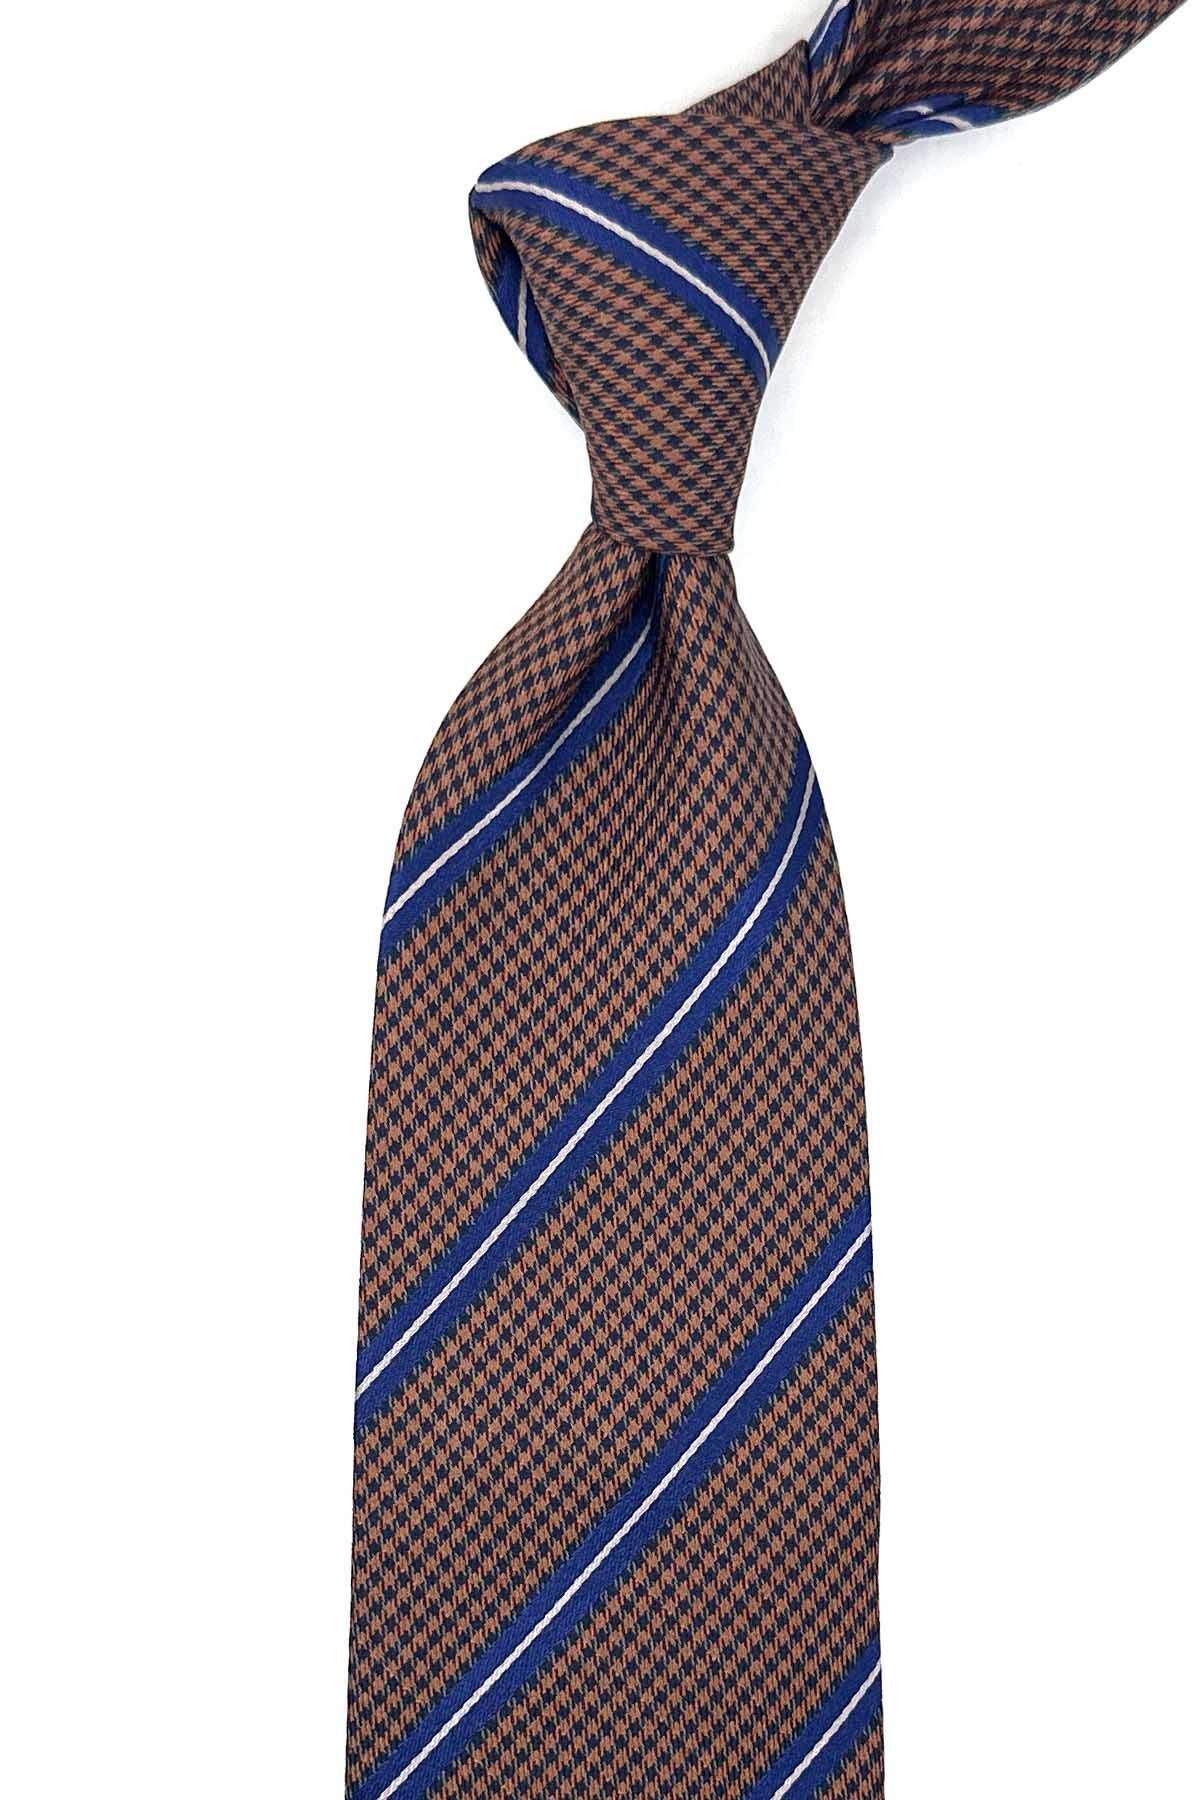 Kravatkolik Norwood Style Turuncu - Mavi Çizgi Desen İtalyan İpek Kravat İK1469